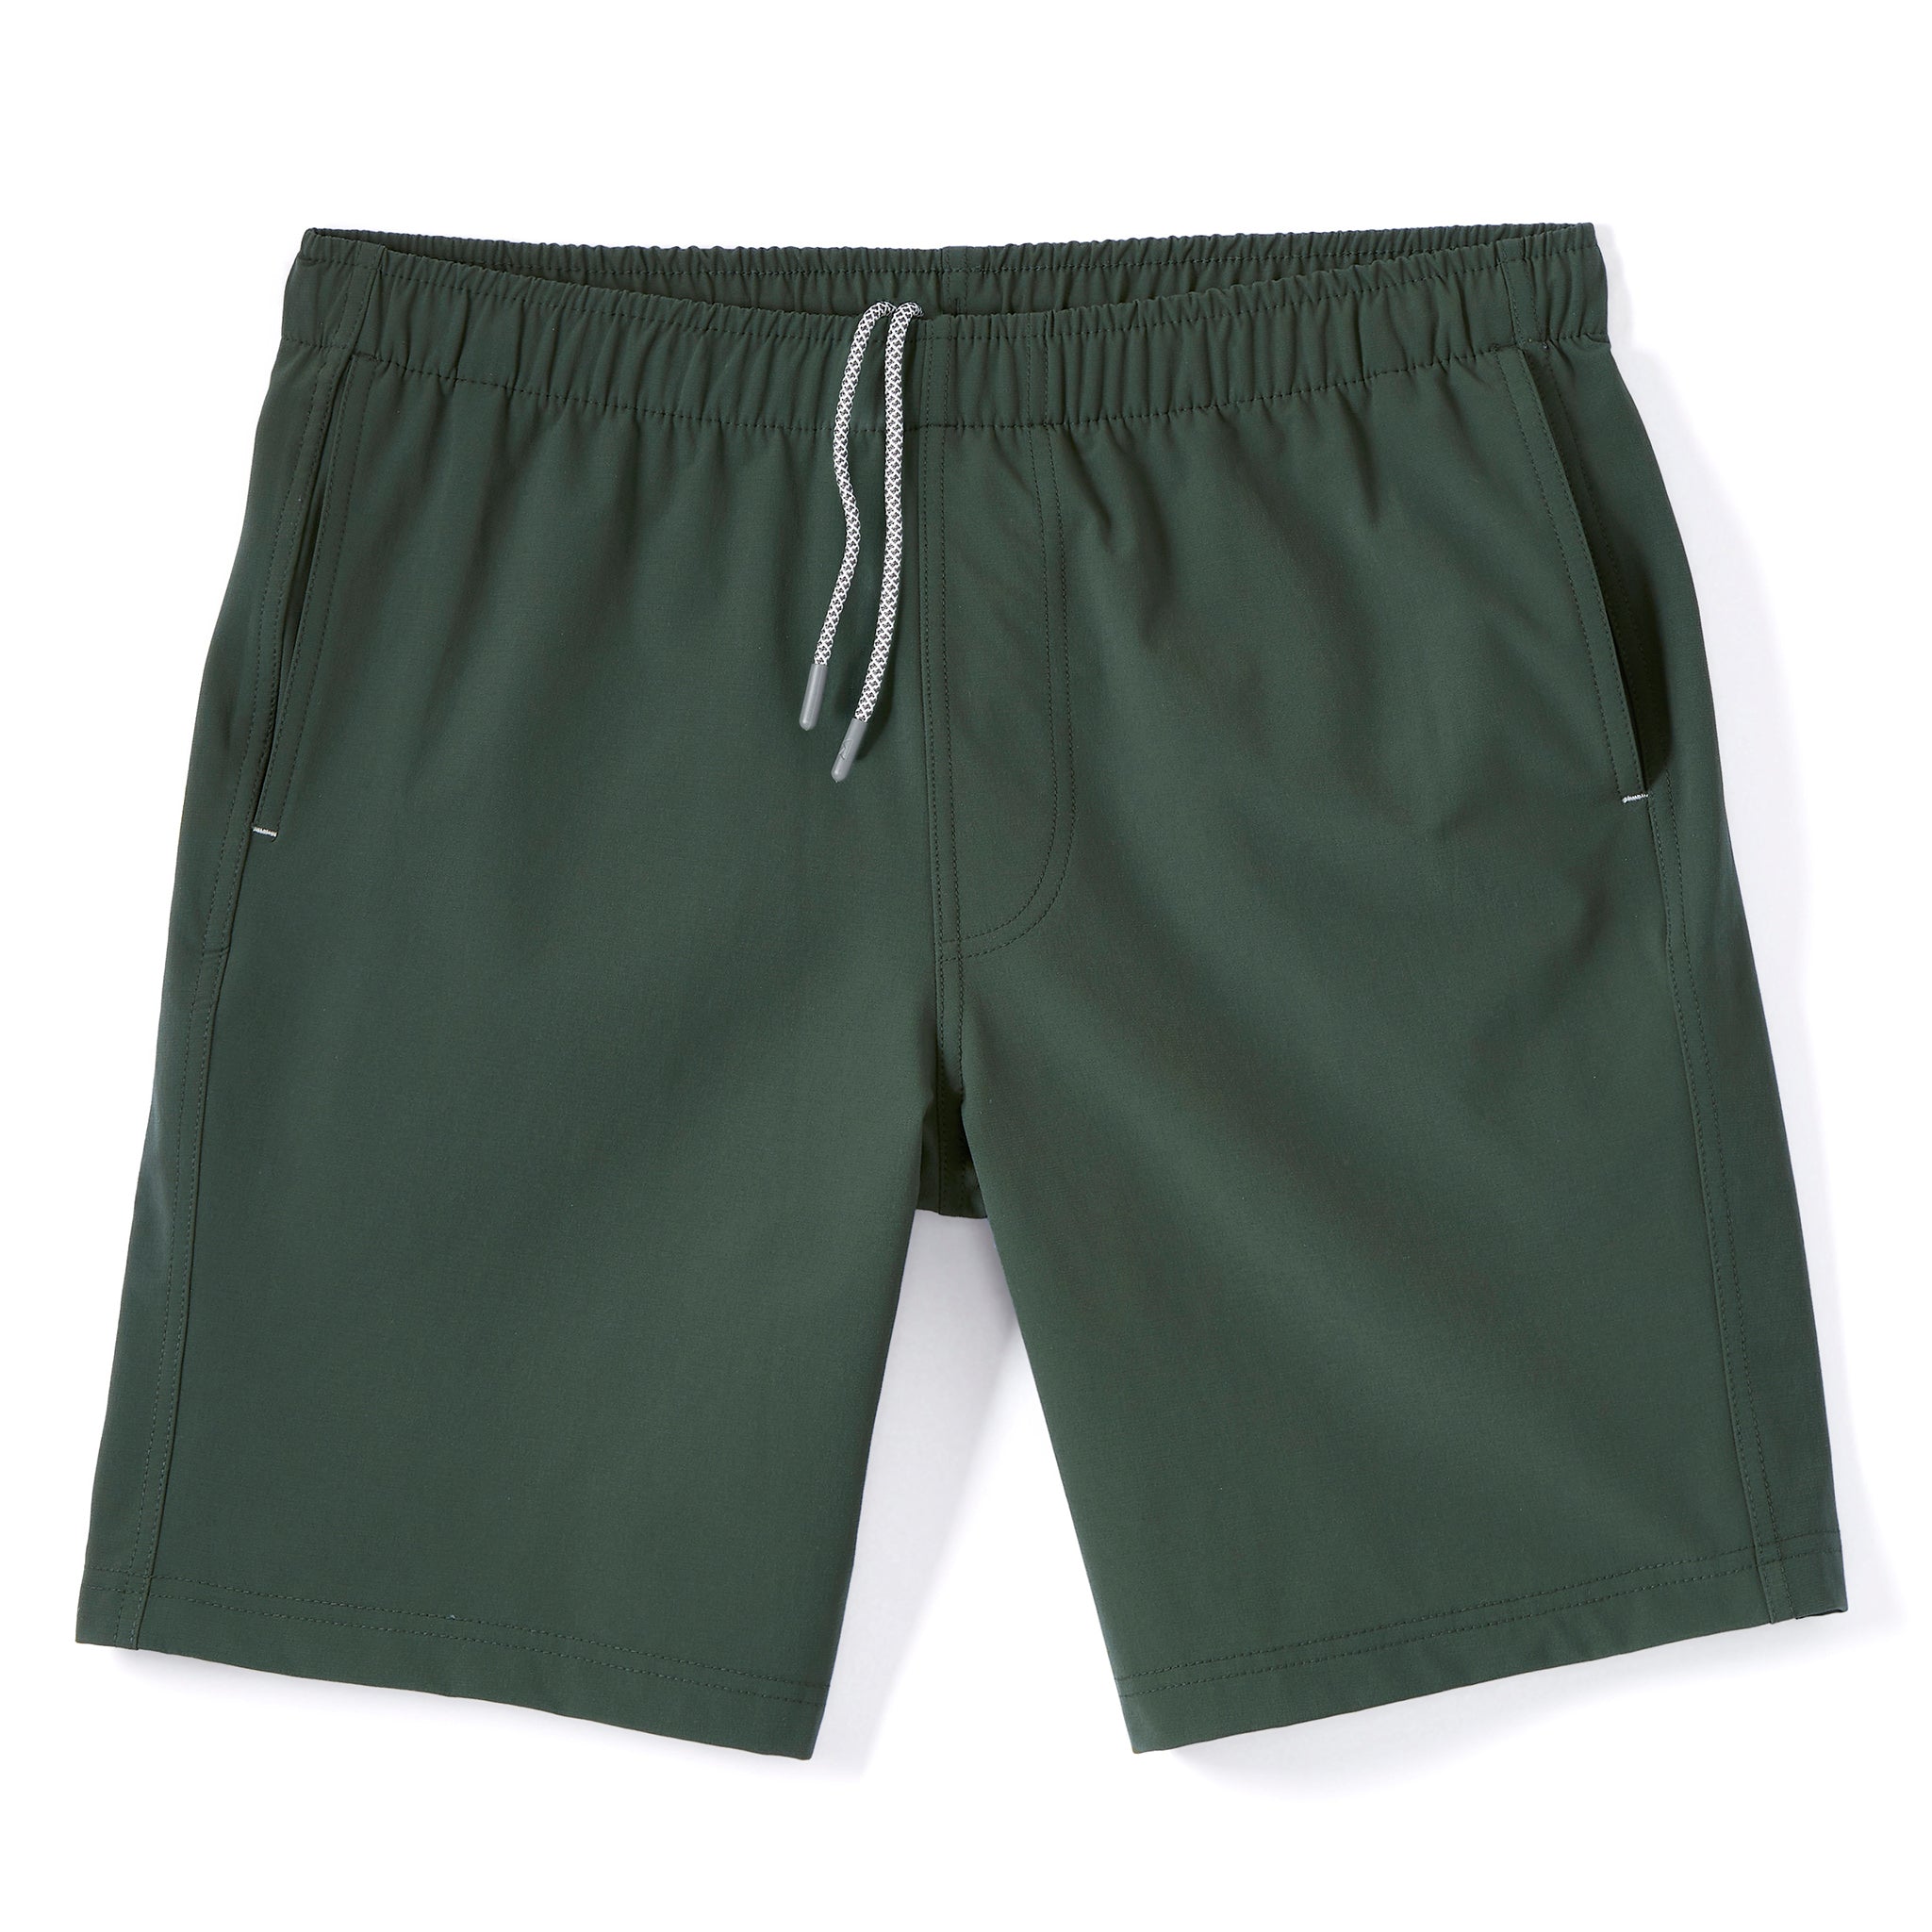 Everyday Short in Deep Sage Green, Men's Athletic Shorts, Myles Apparel